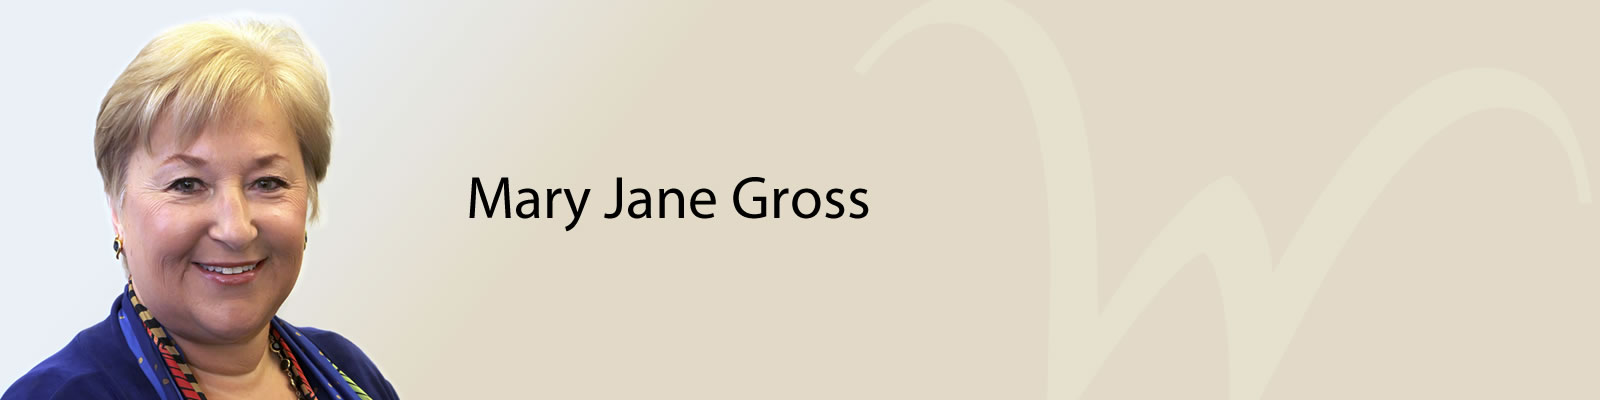 photo of Mary Jane Gross